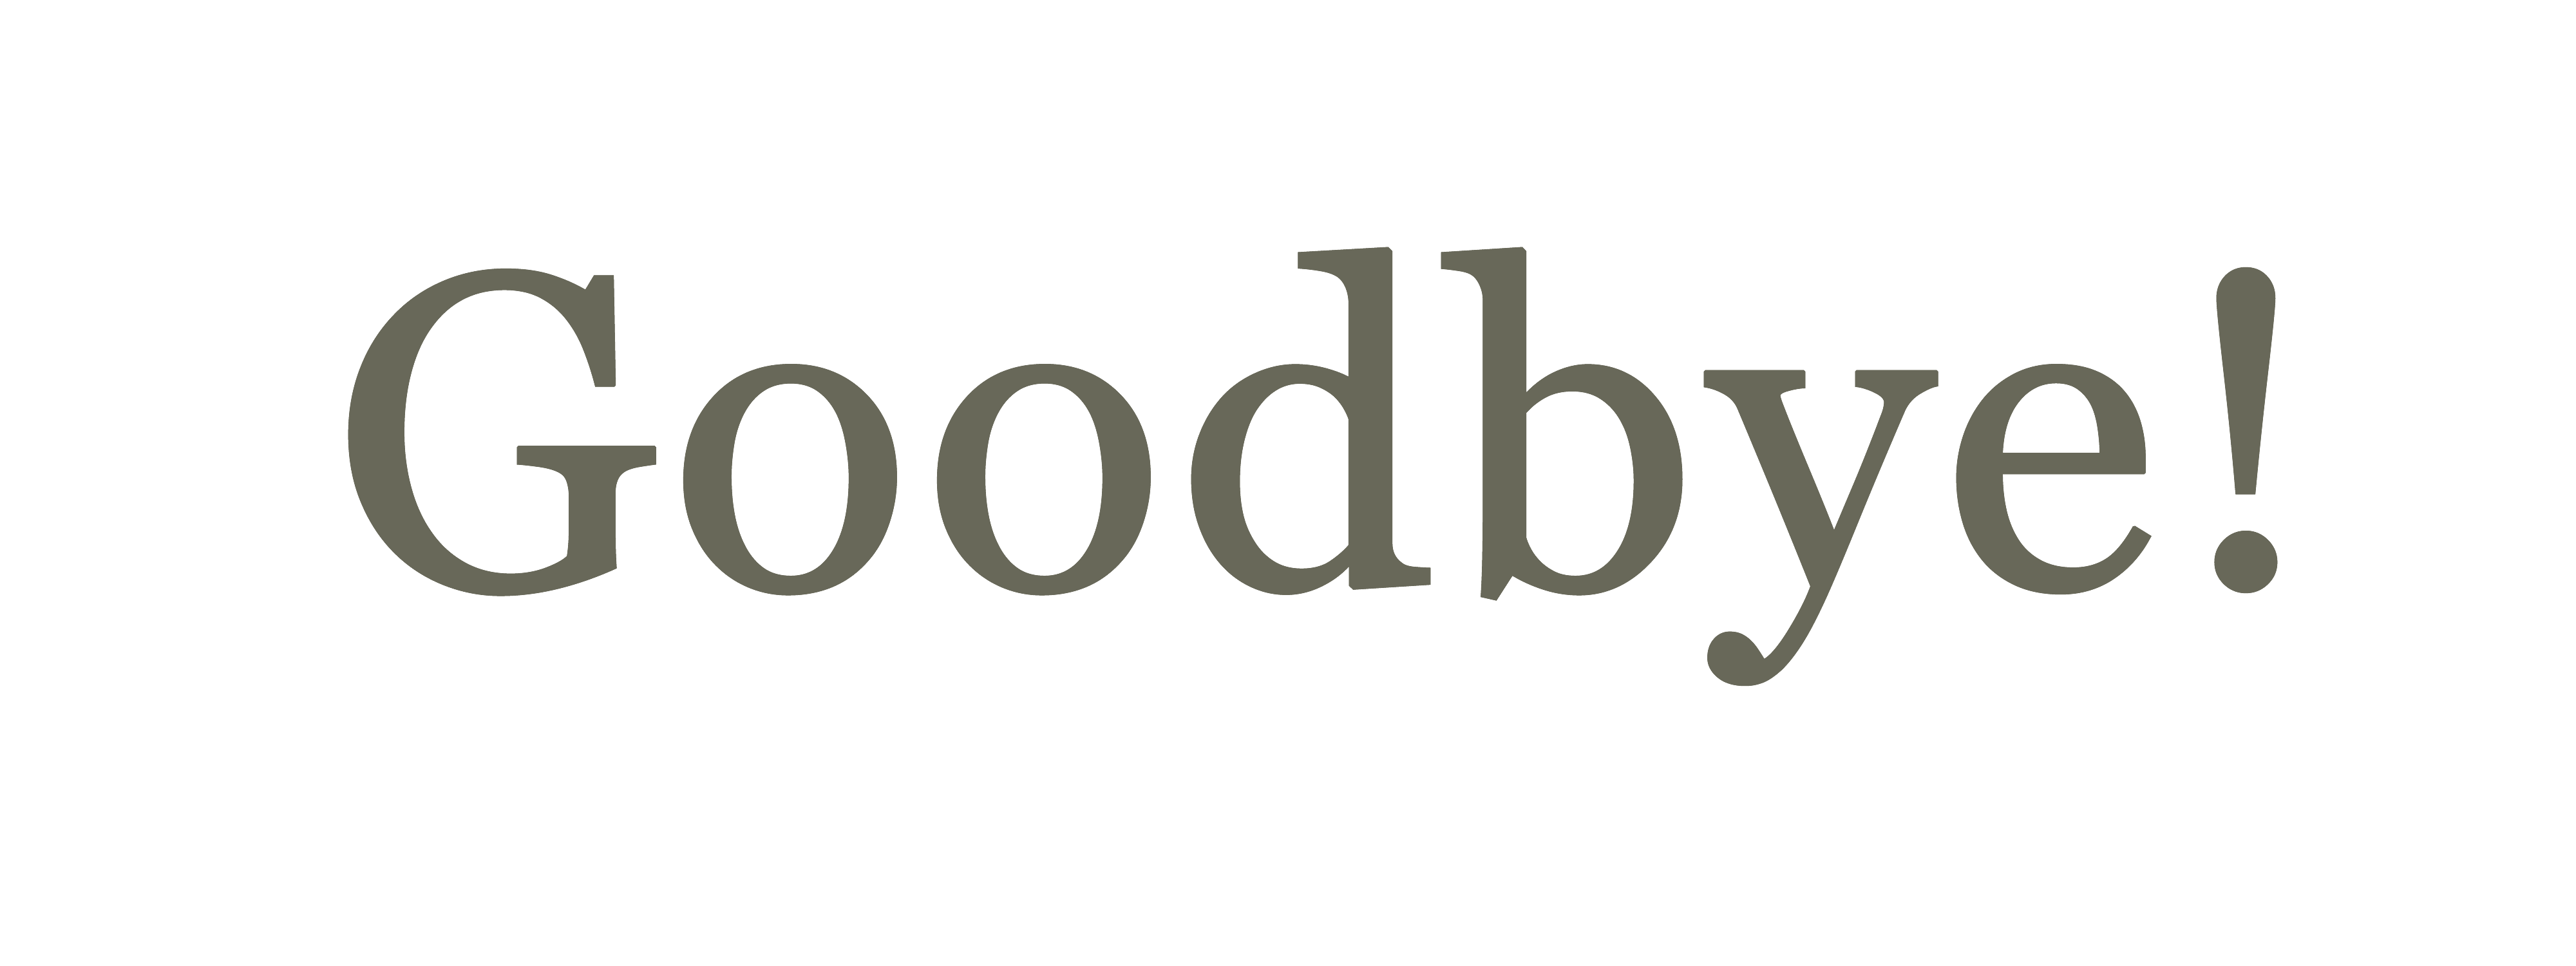 Goodbye - Free Goodbye PNG HD